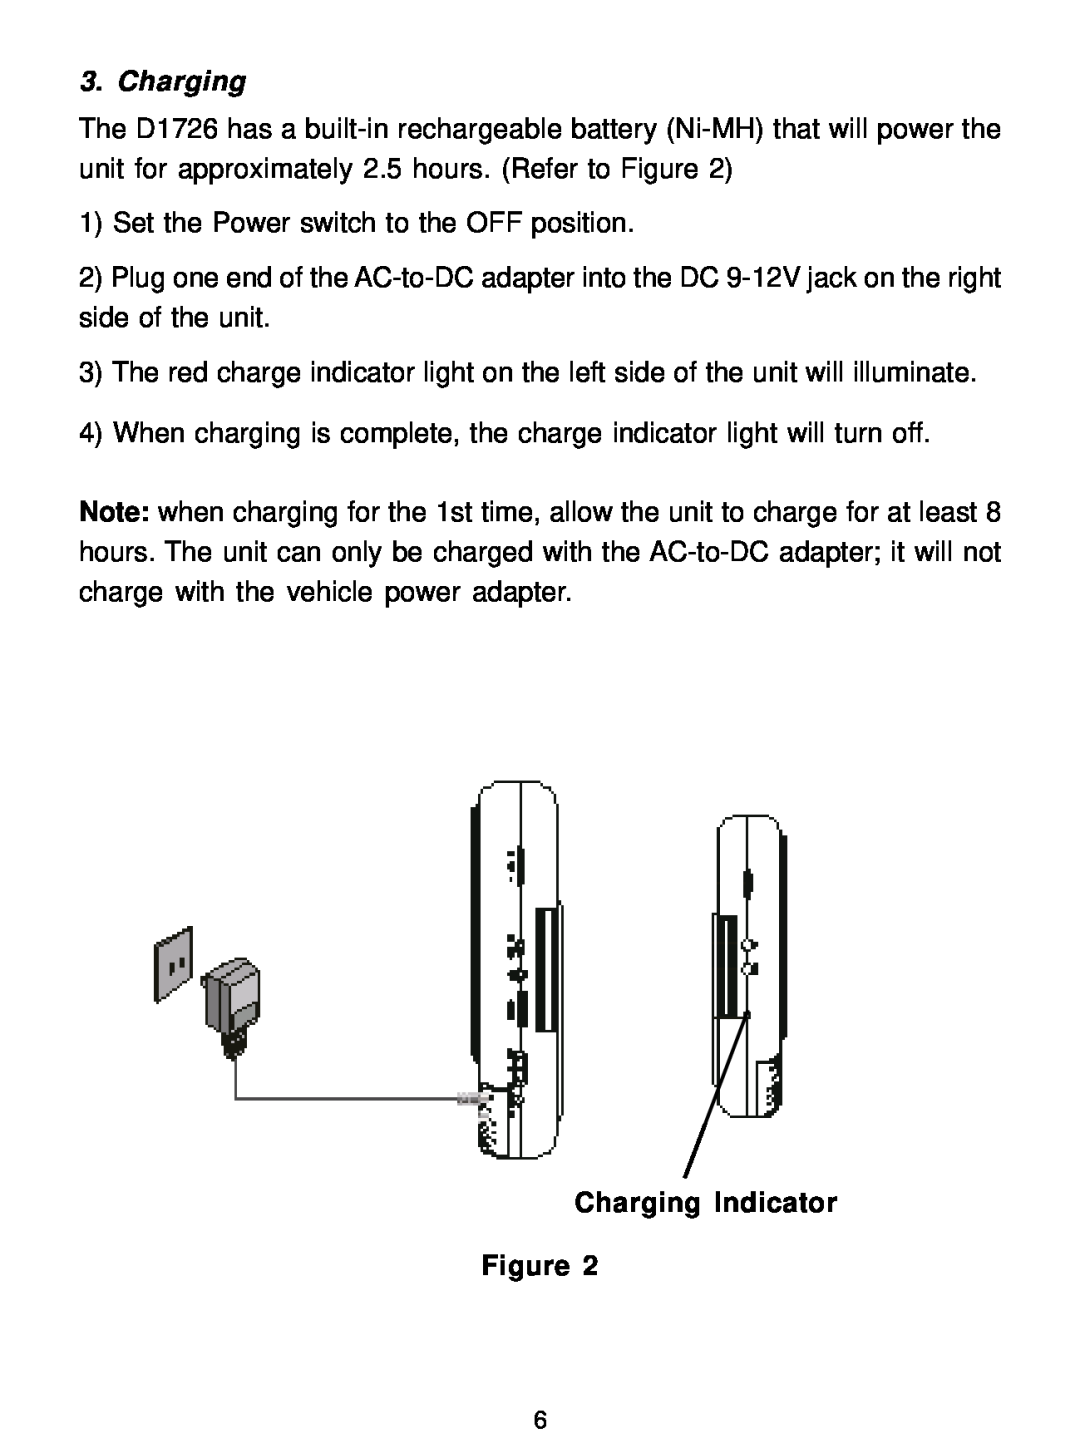 Audiovox D1726 manual Charging Indicator 